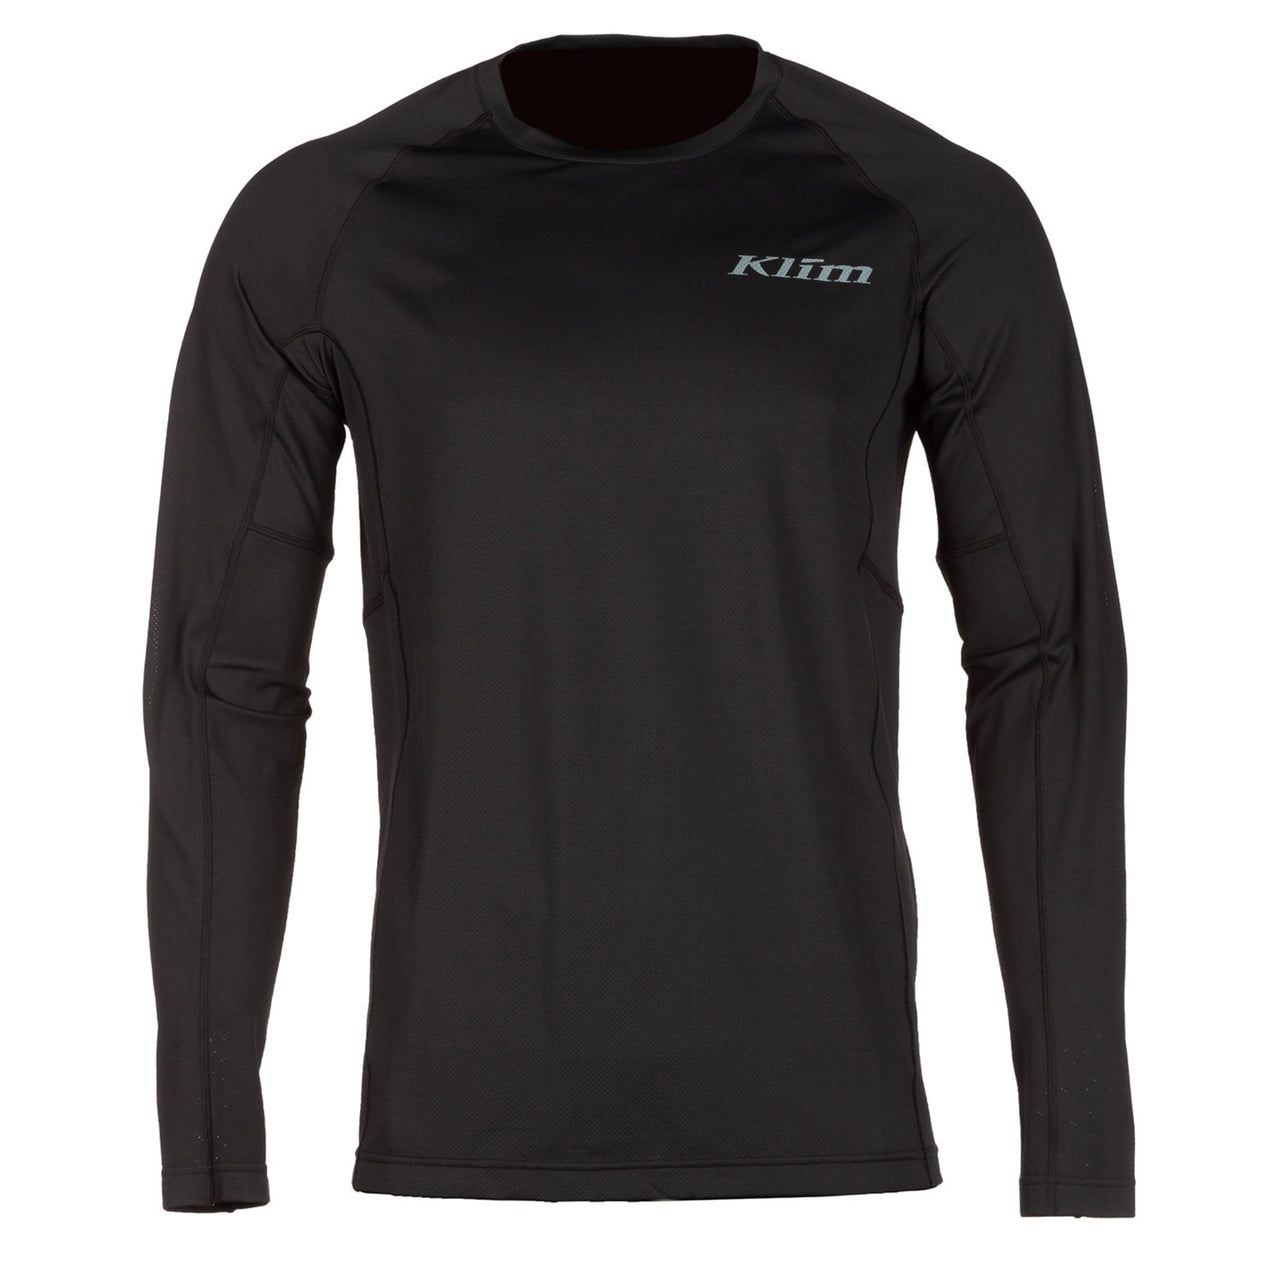 Klim Aggressor -1.0 Cooling Base Layers / Long Sleeve Shirt - Black